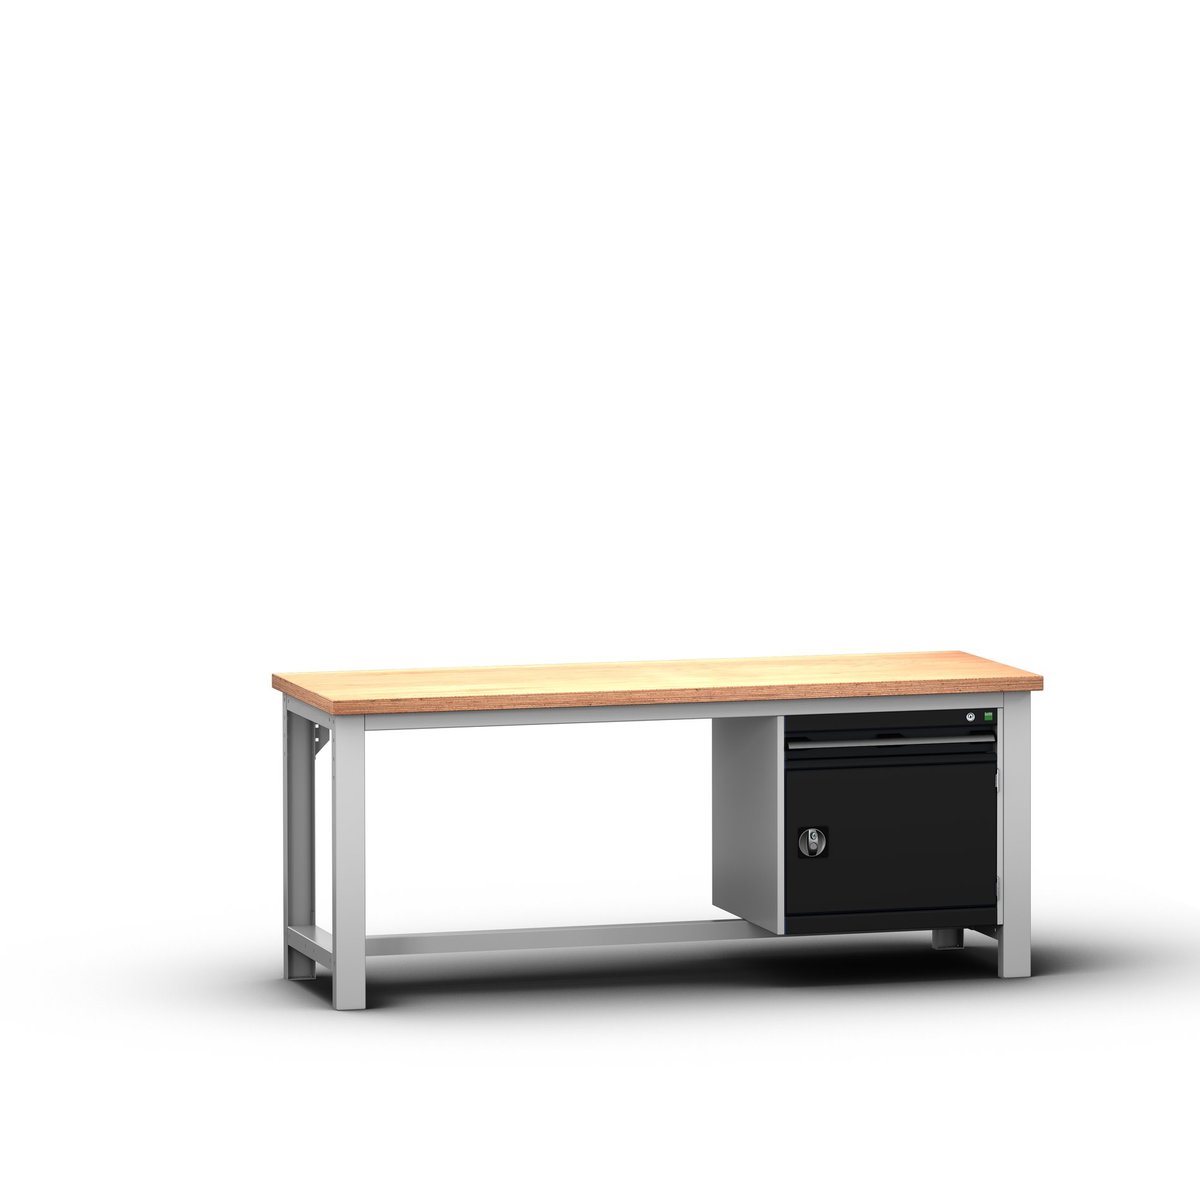 41003390. - cubio framework bench (mpx)